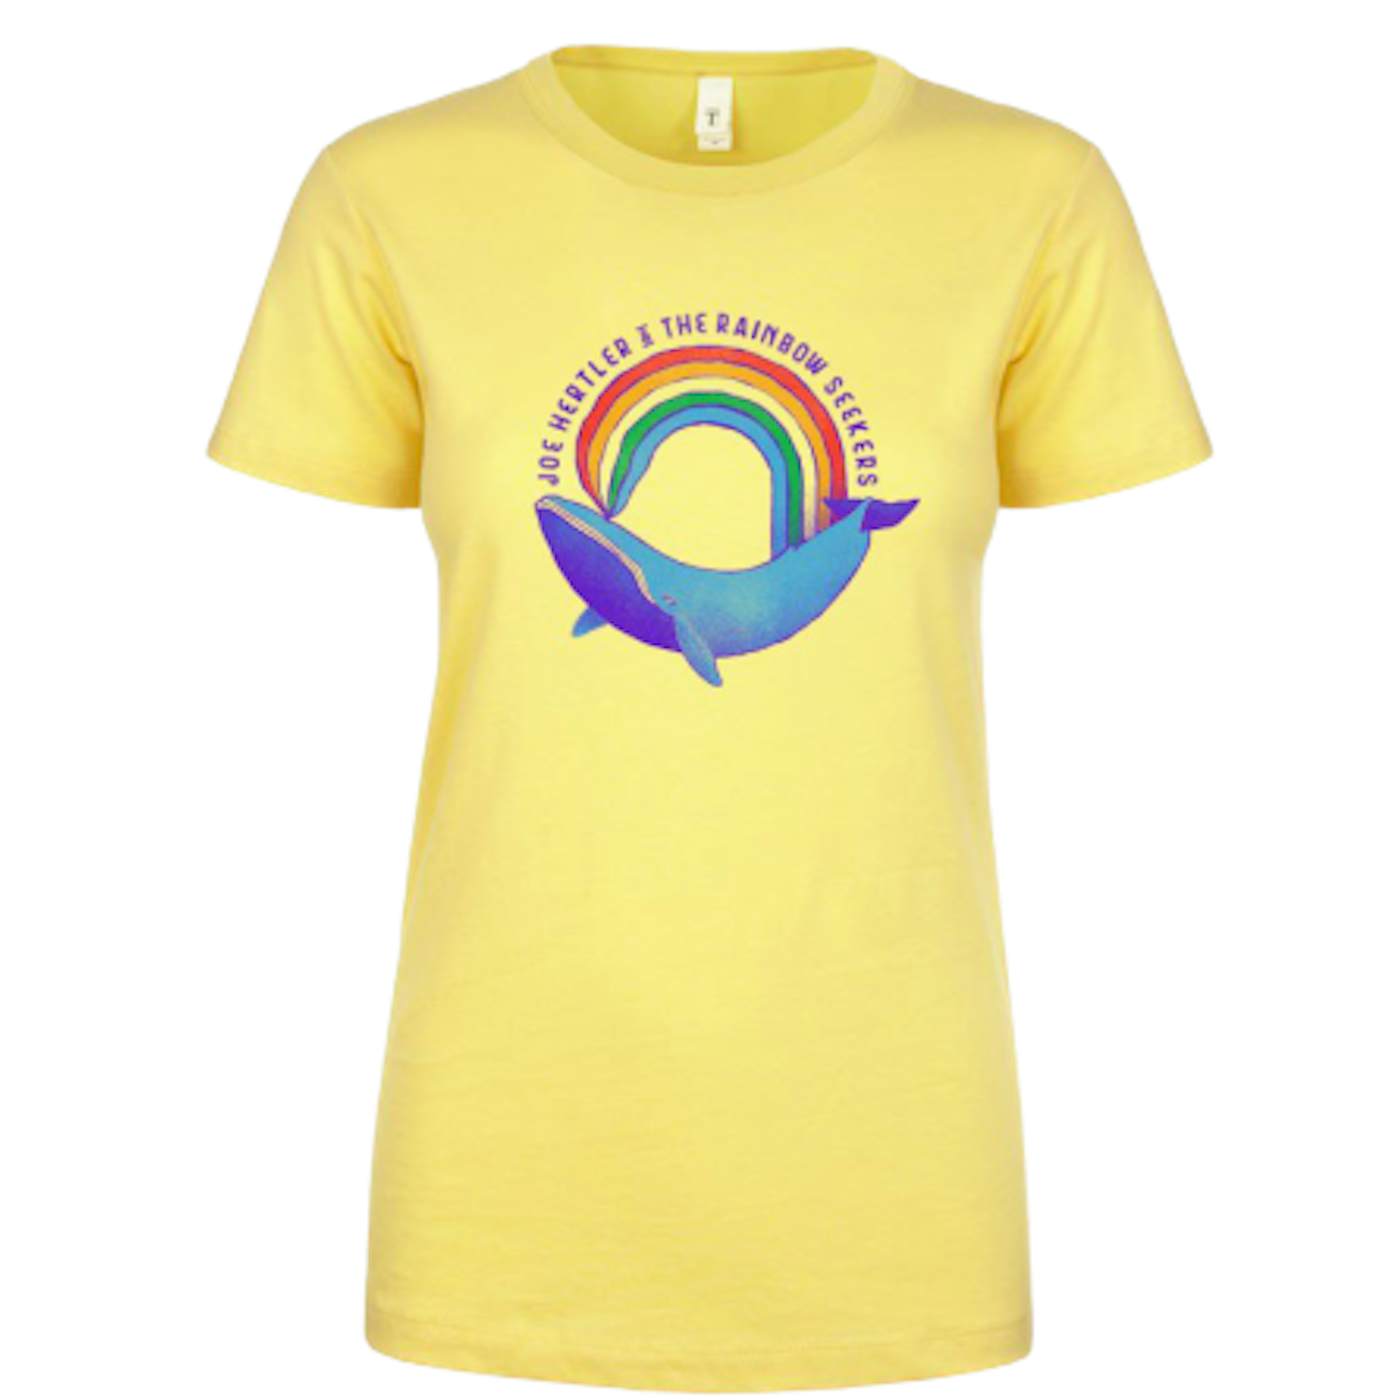 Joe Hertler & The Rainbow Seekers Rainbow Whale T-Shirt (Ladies Cut)